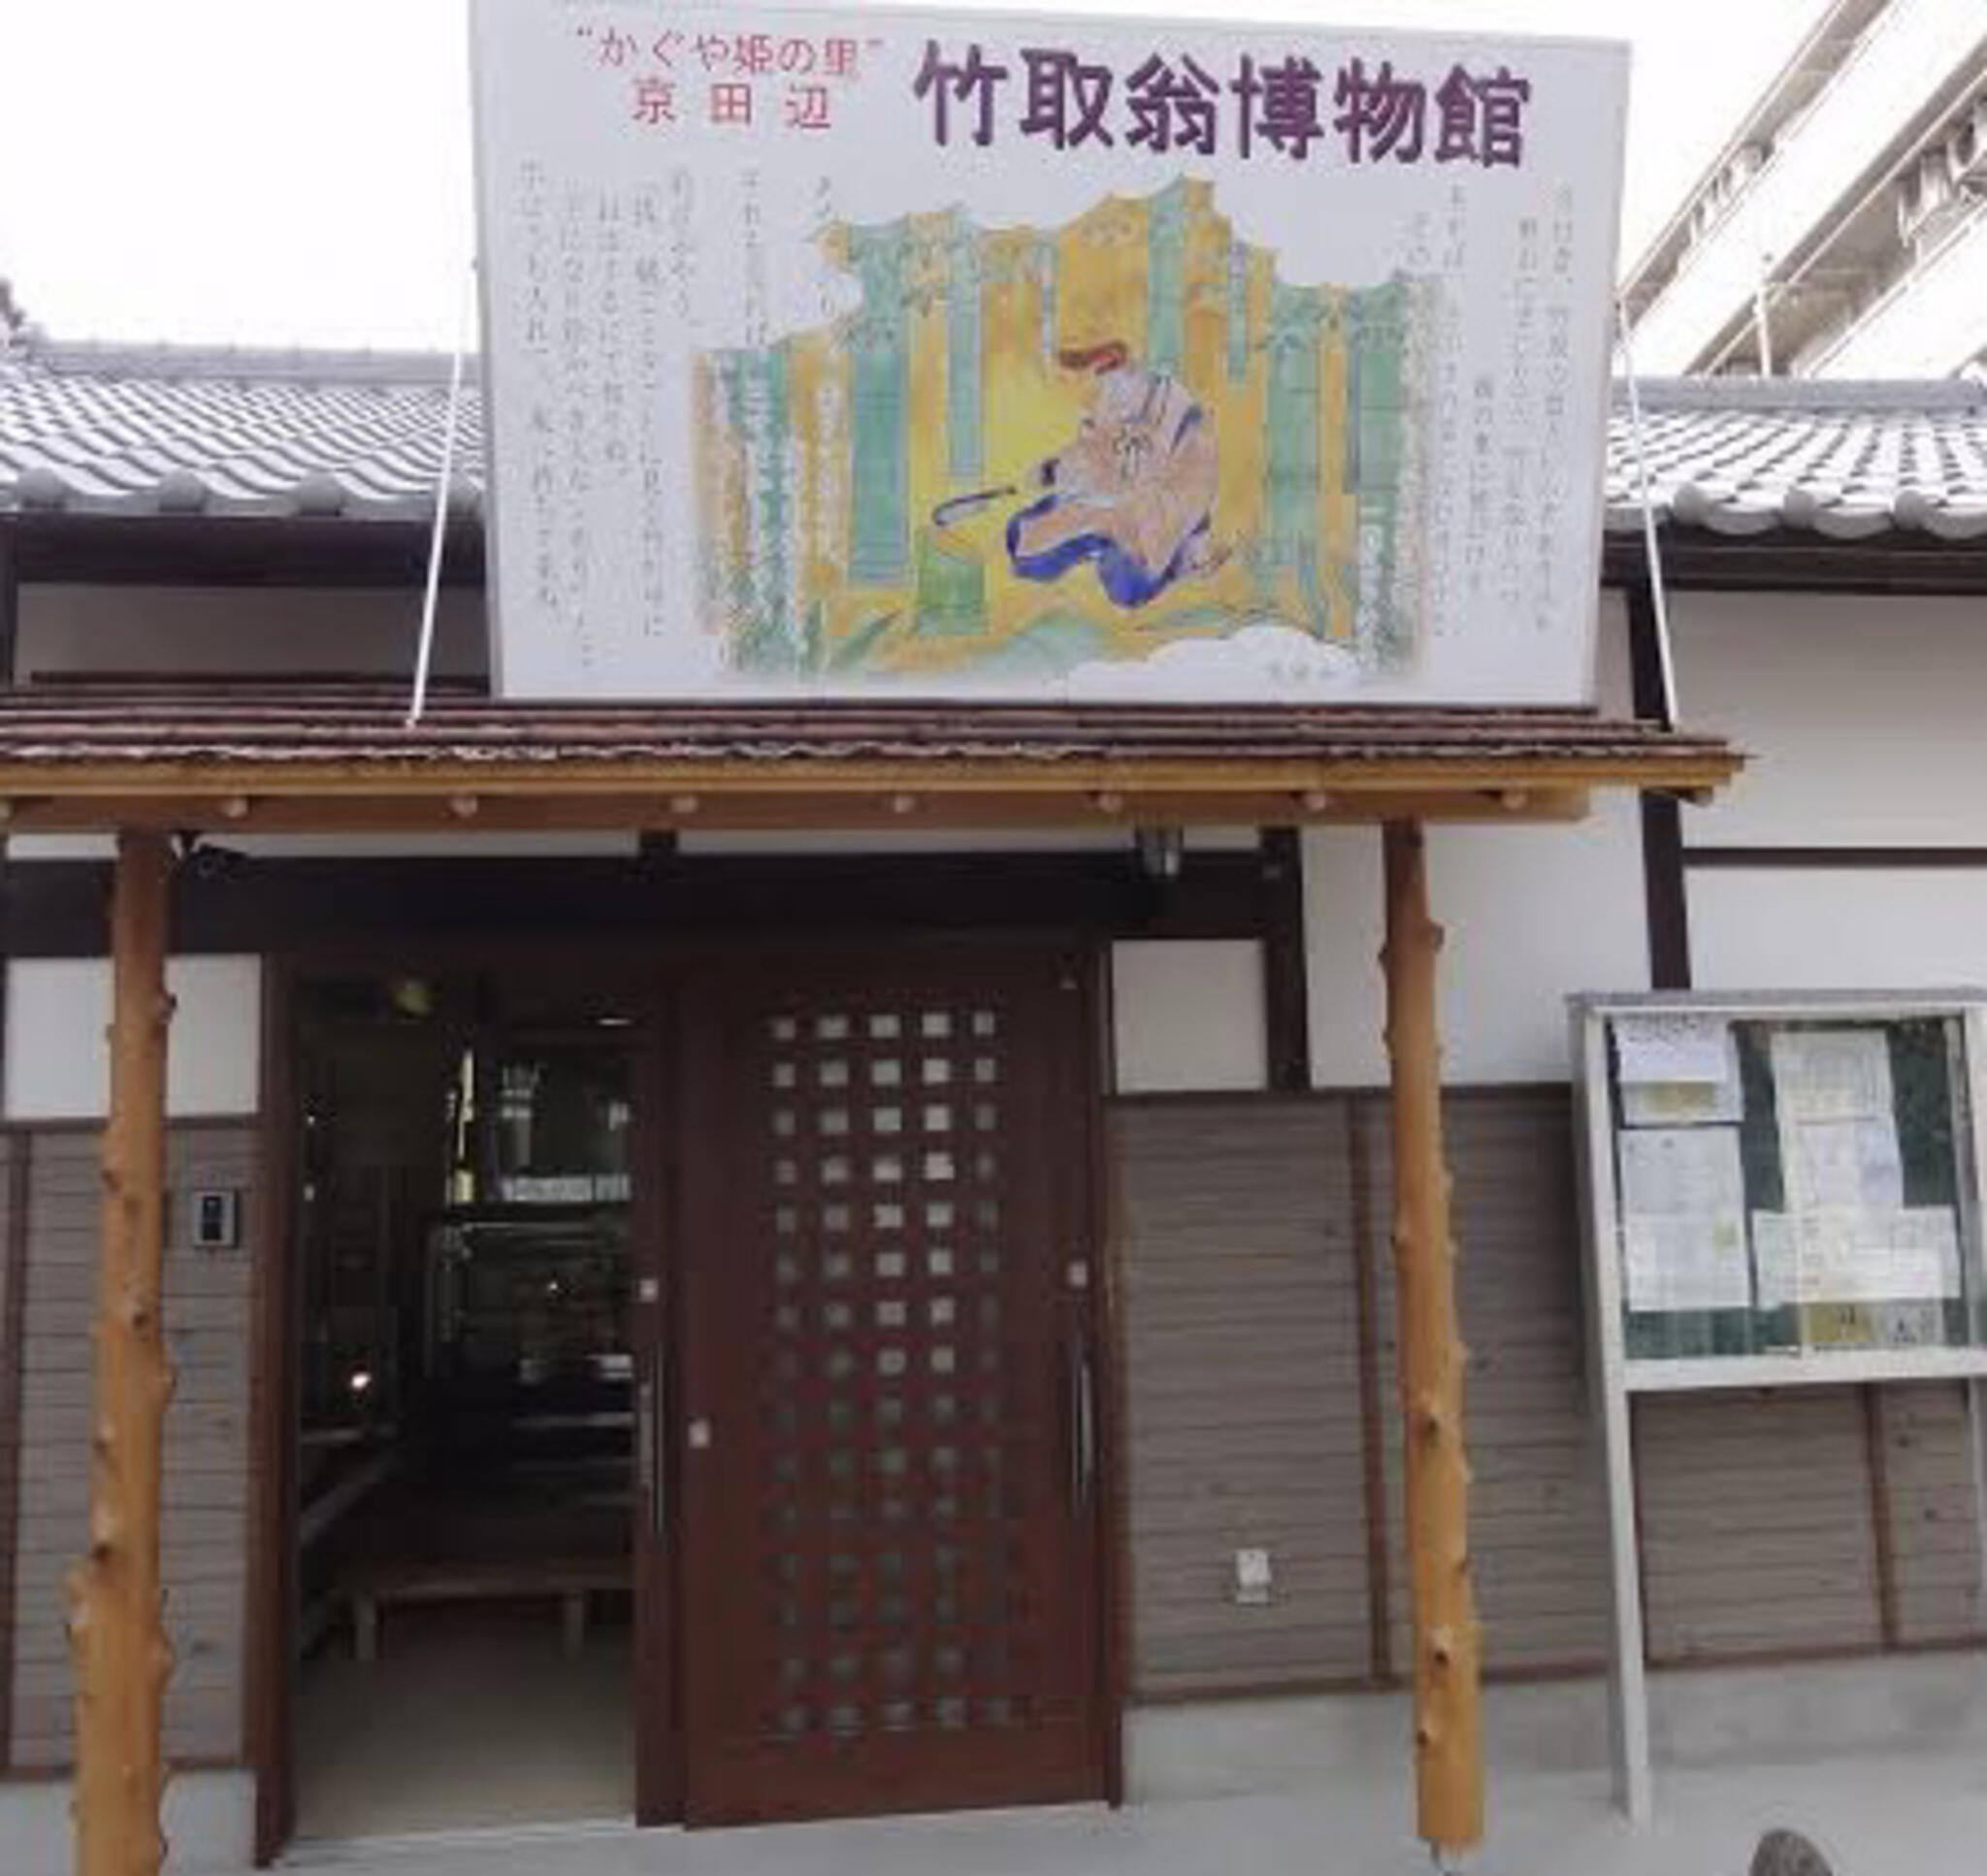 竹取翁博物館の代表写真9